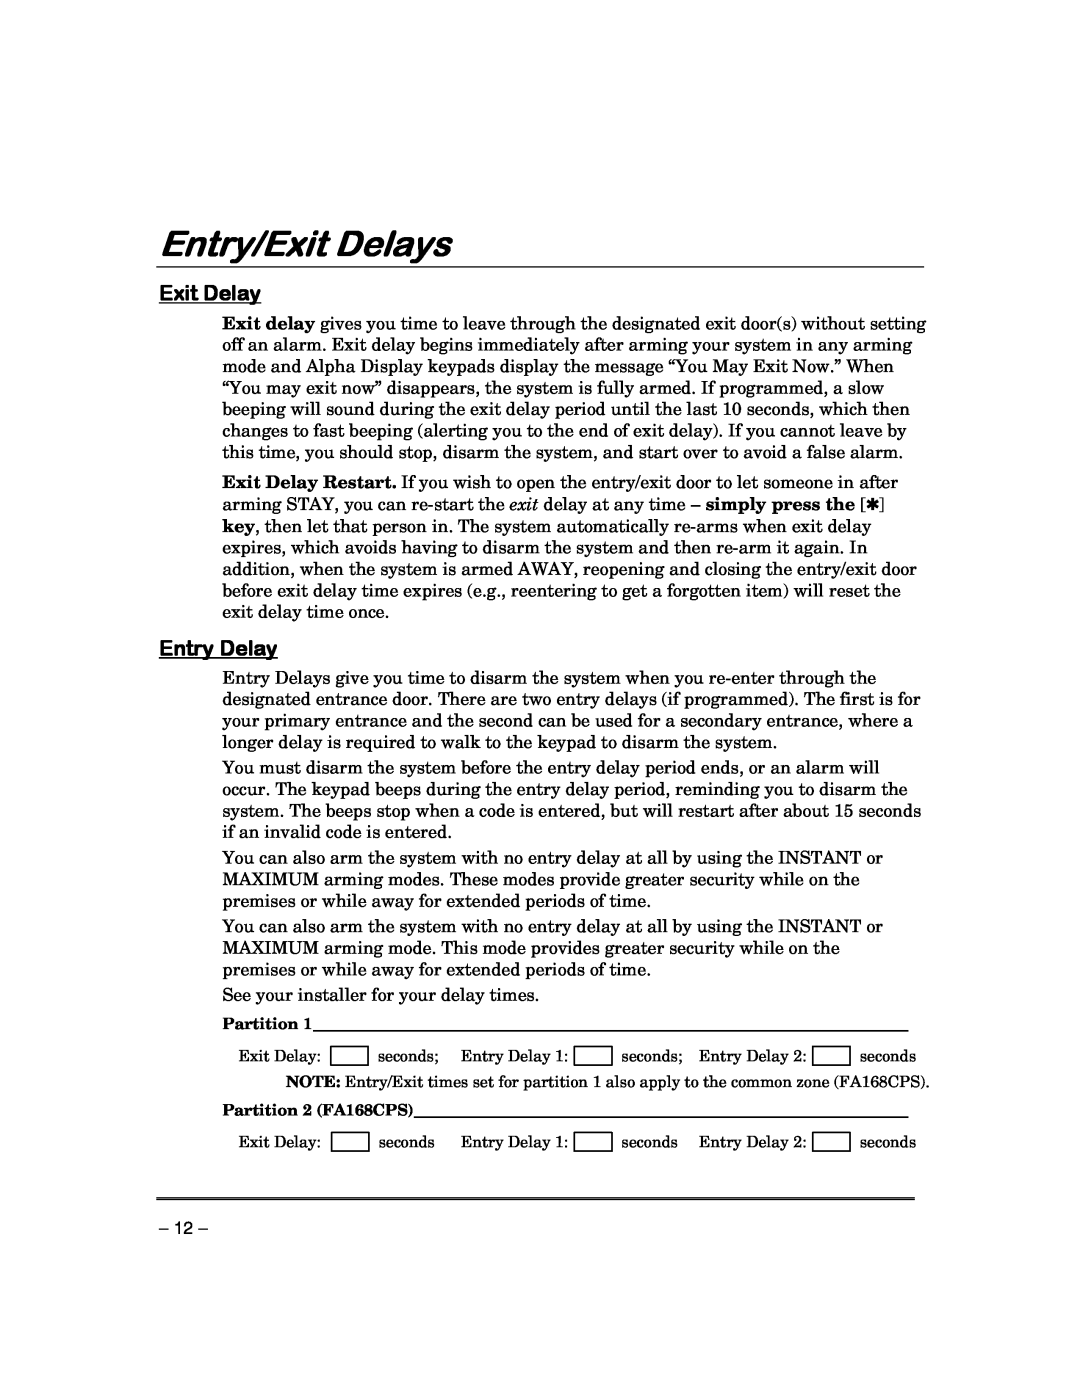 First Alert FA148CPSIA, FA168CPSSIA manual Entry/Exit Delays, Entry Delay 